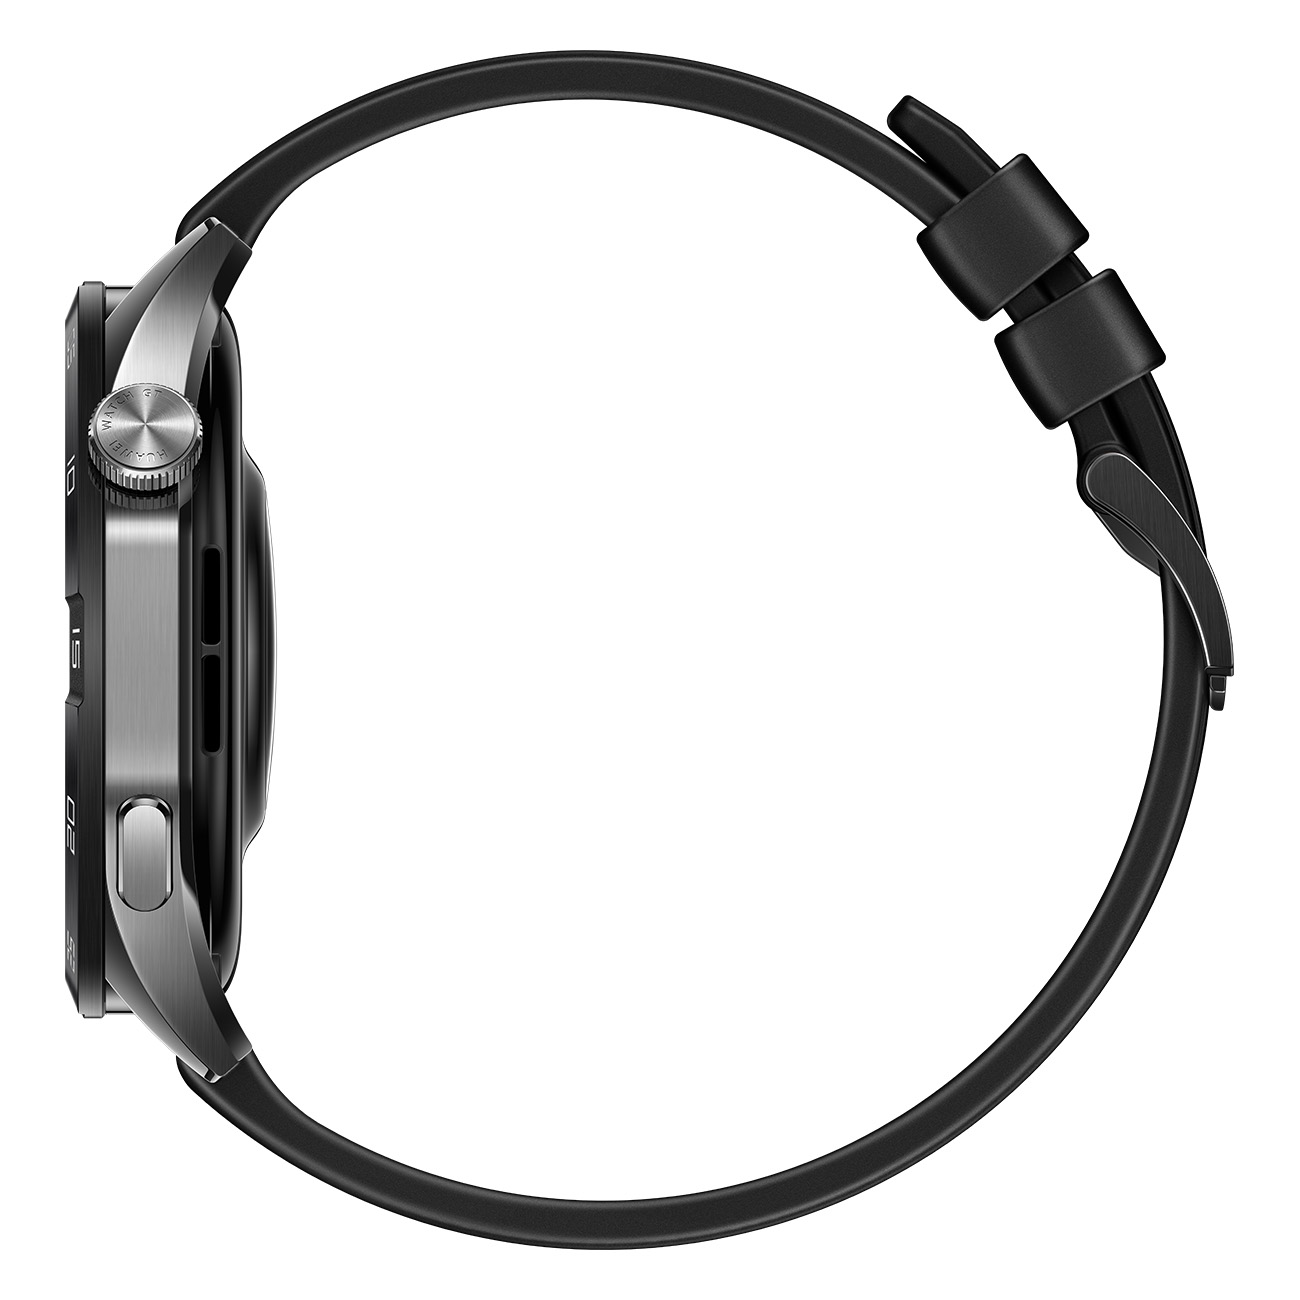 Fluoroelastomer, HUAWEI GT4 schwarz Smartwatch Watch